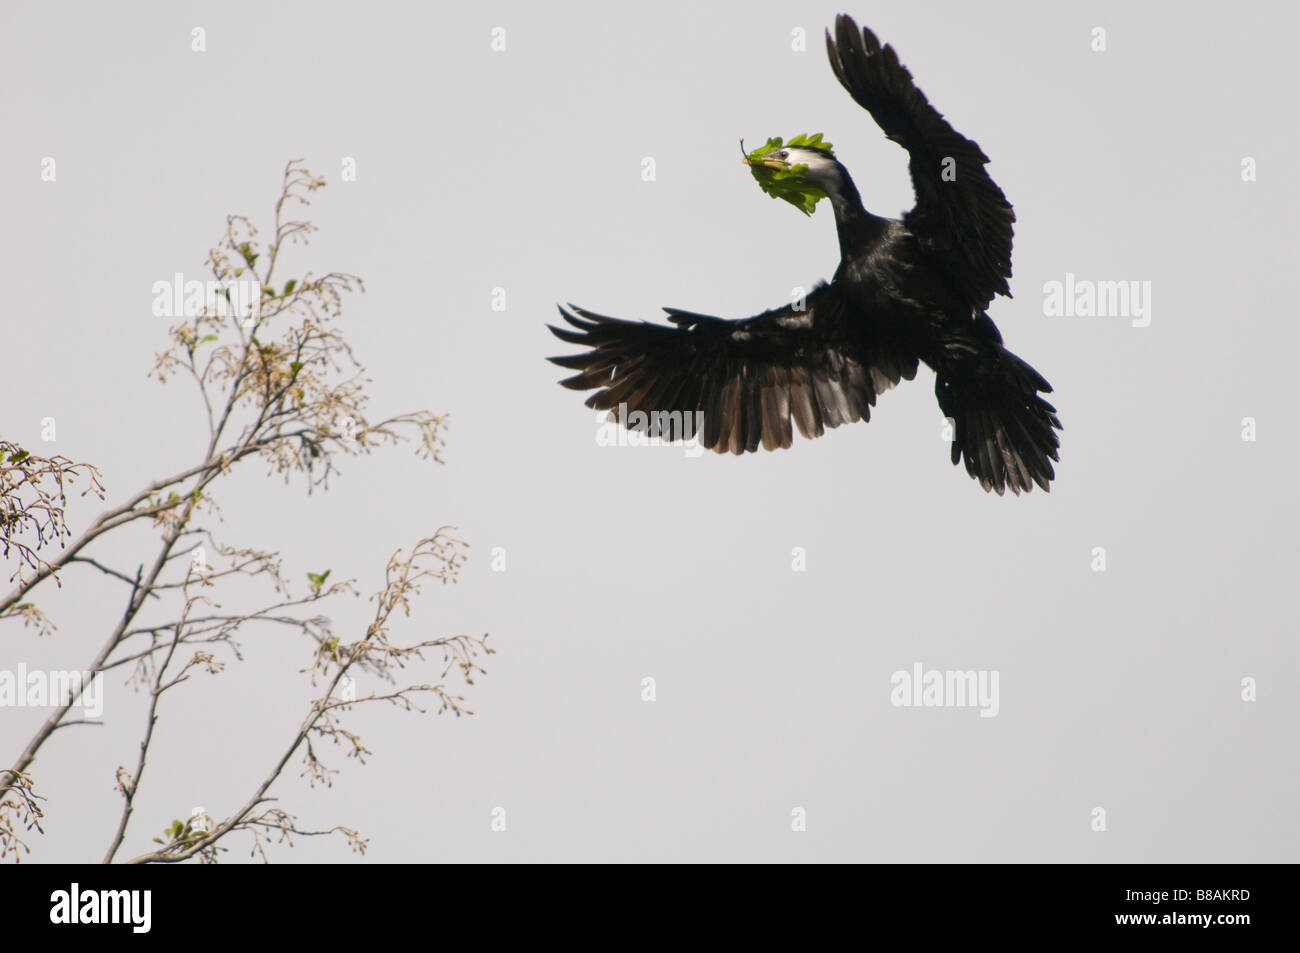 Black shag in flight - returning with nesting materials Stock Photo